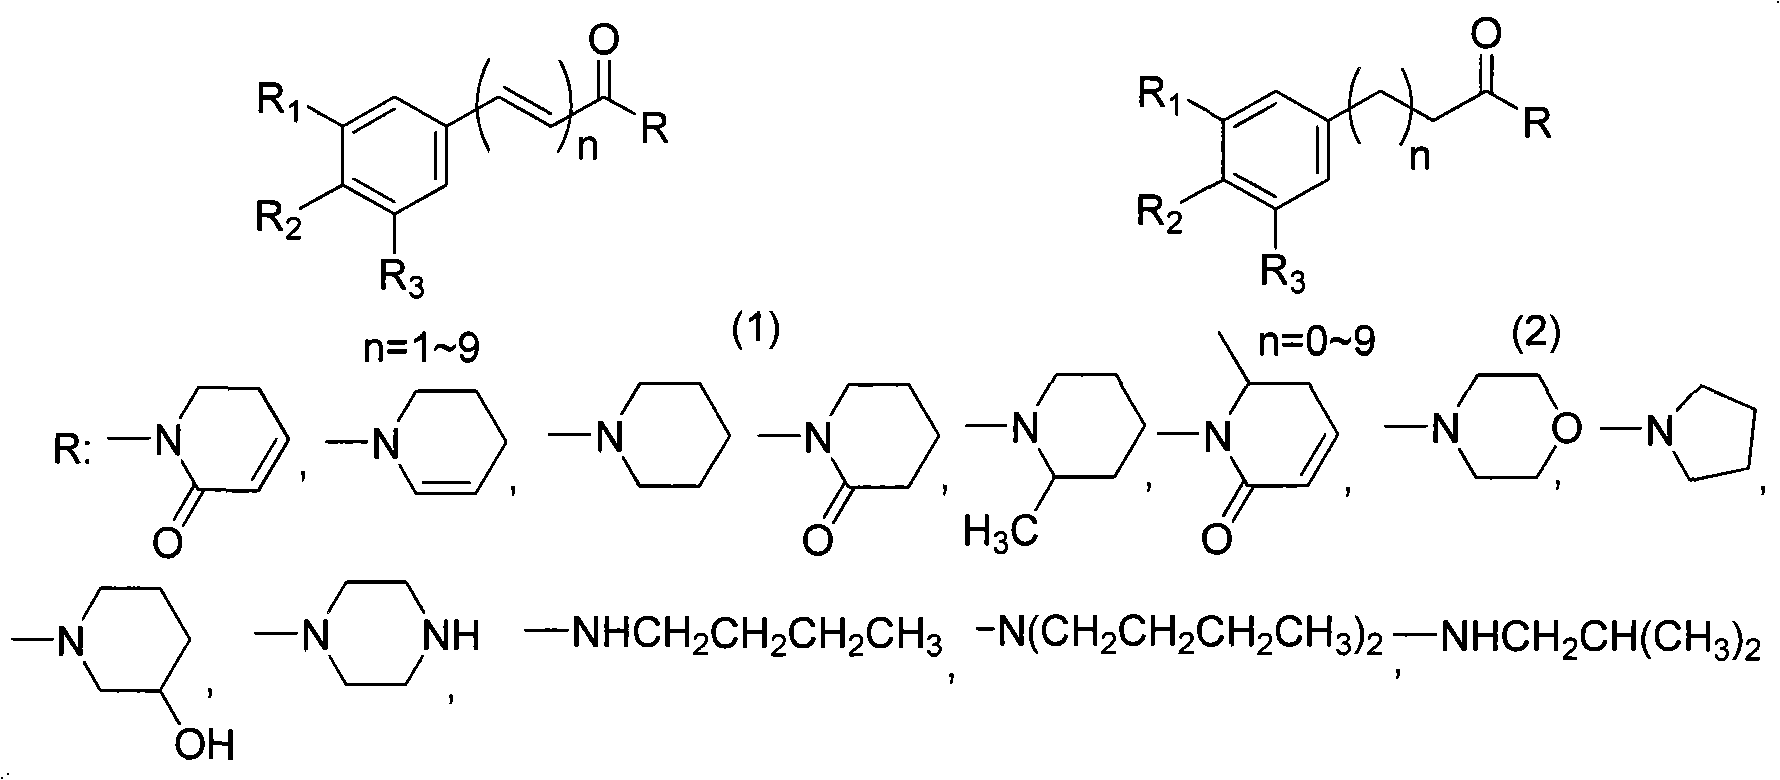 Method for synthesizing piperlongumine compounds